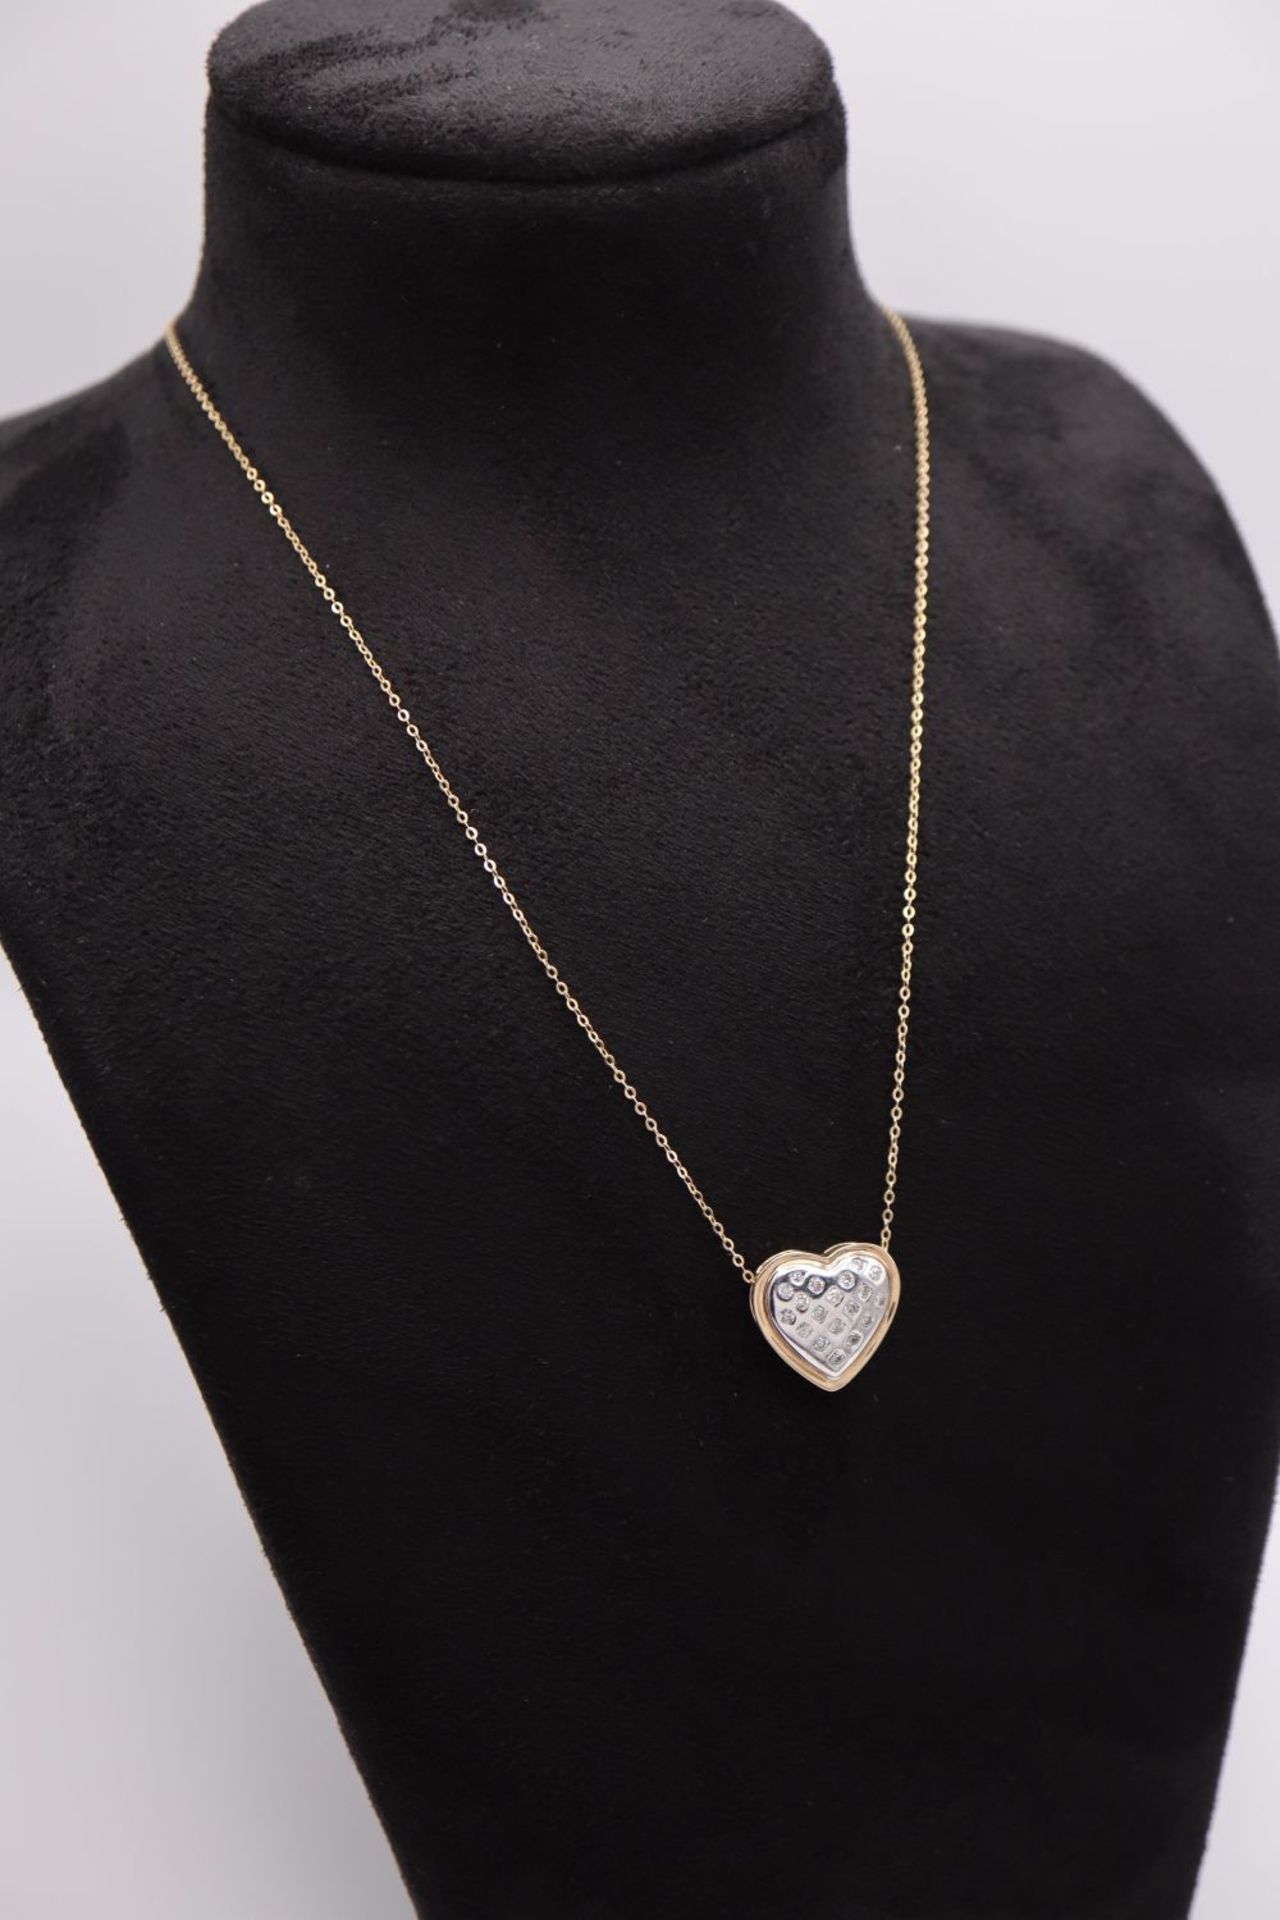 0.50CT DIAMOND 'HEART SHAPE' PENDANT in 9K '375' GOLD SETTING & CHAIN - Image 2 of 5